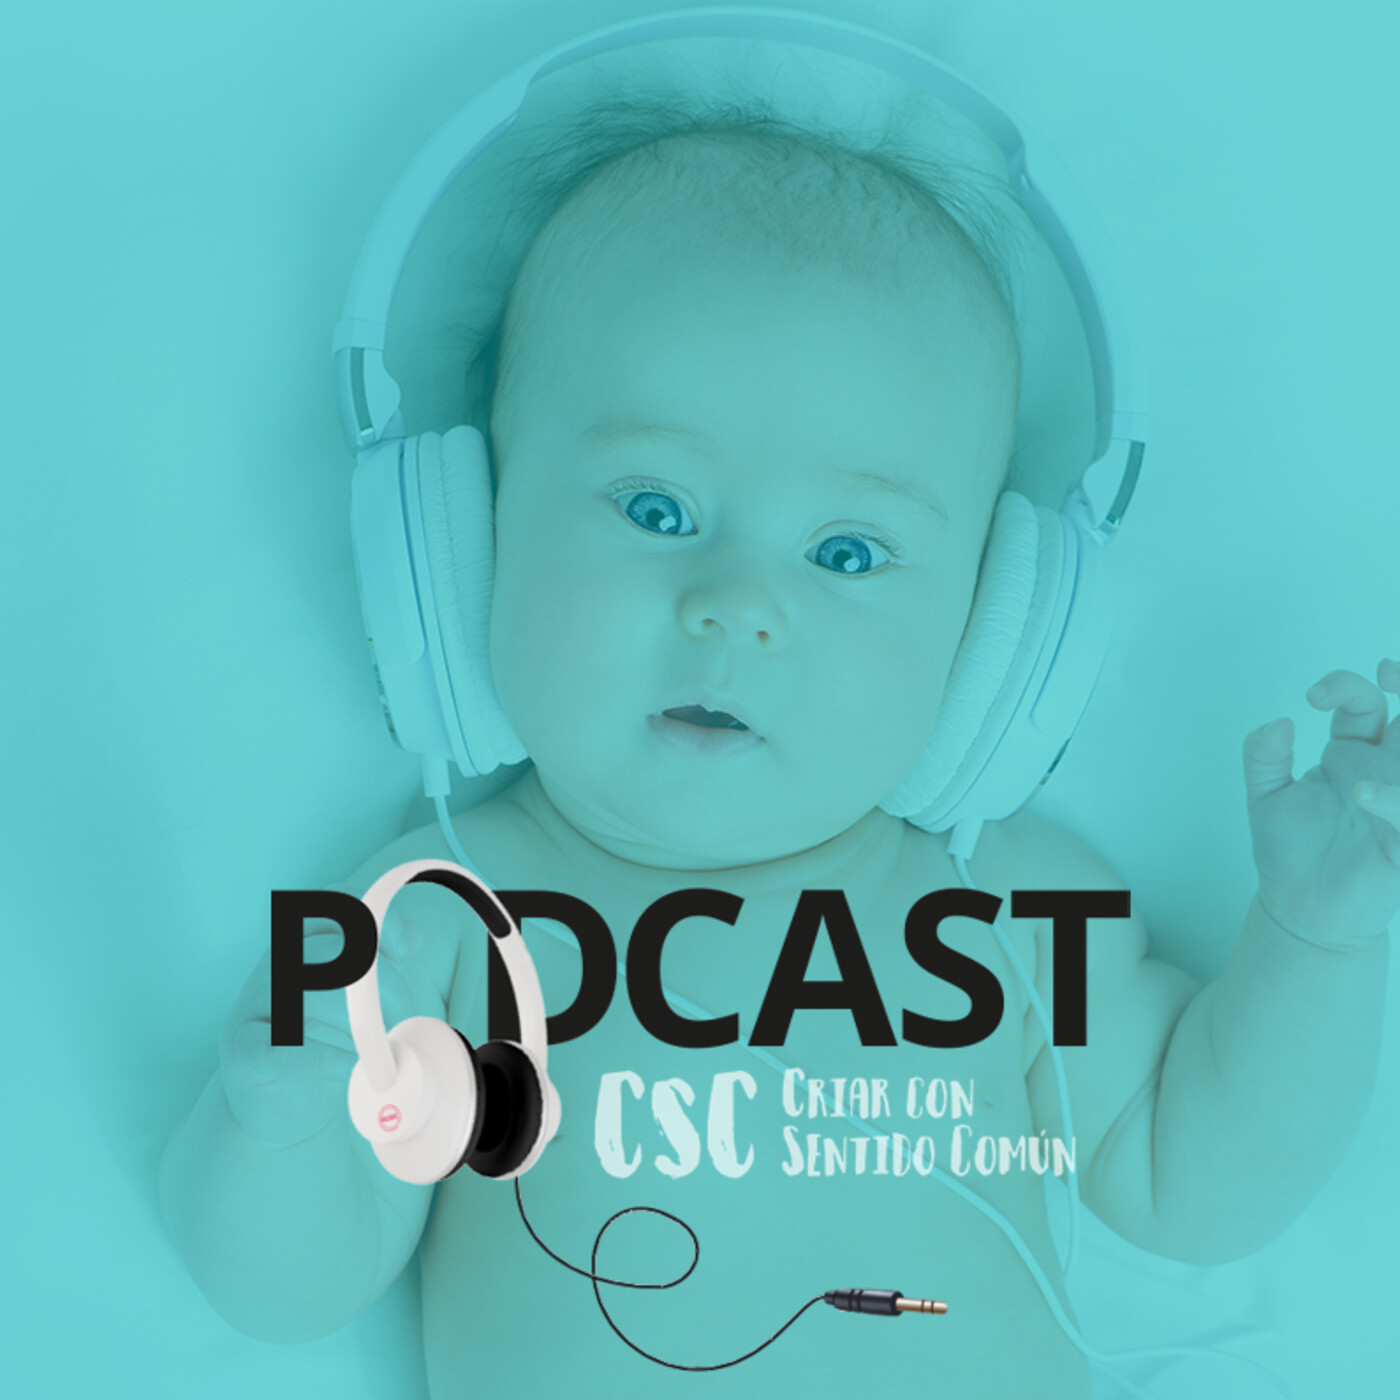 18. La vuelta al cole - Podcast CSC - 1 de septiembre de 2021